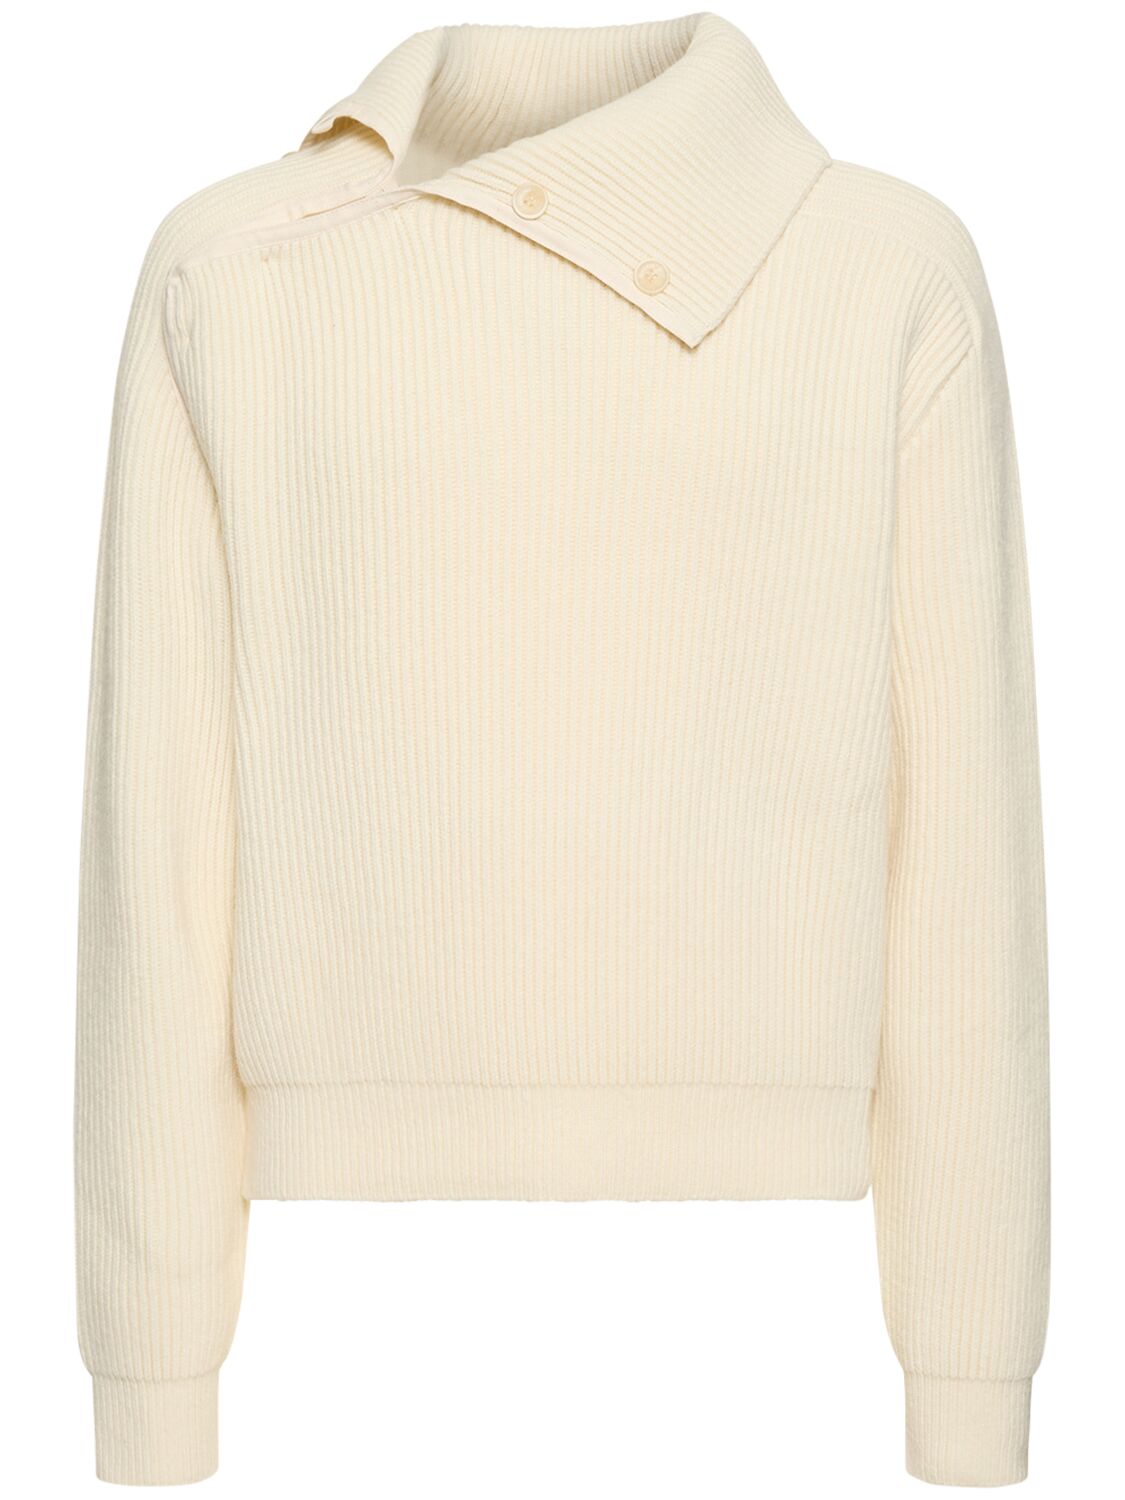 La Maille Vega Wool Blend Sweater